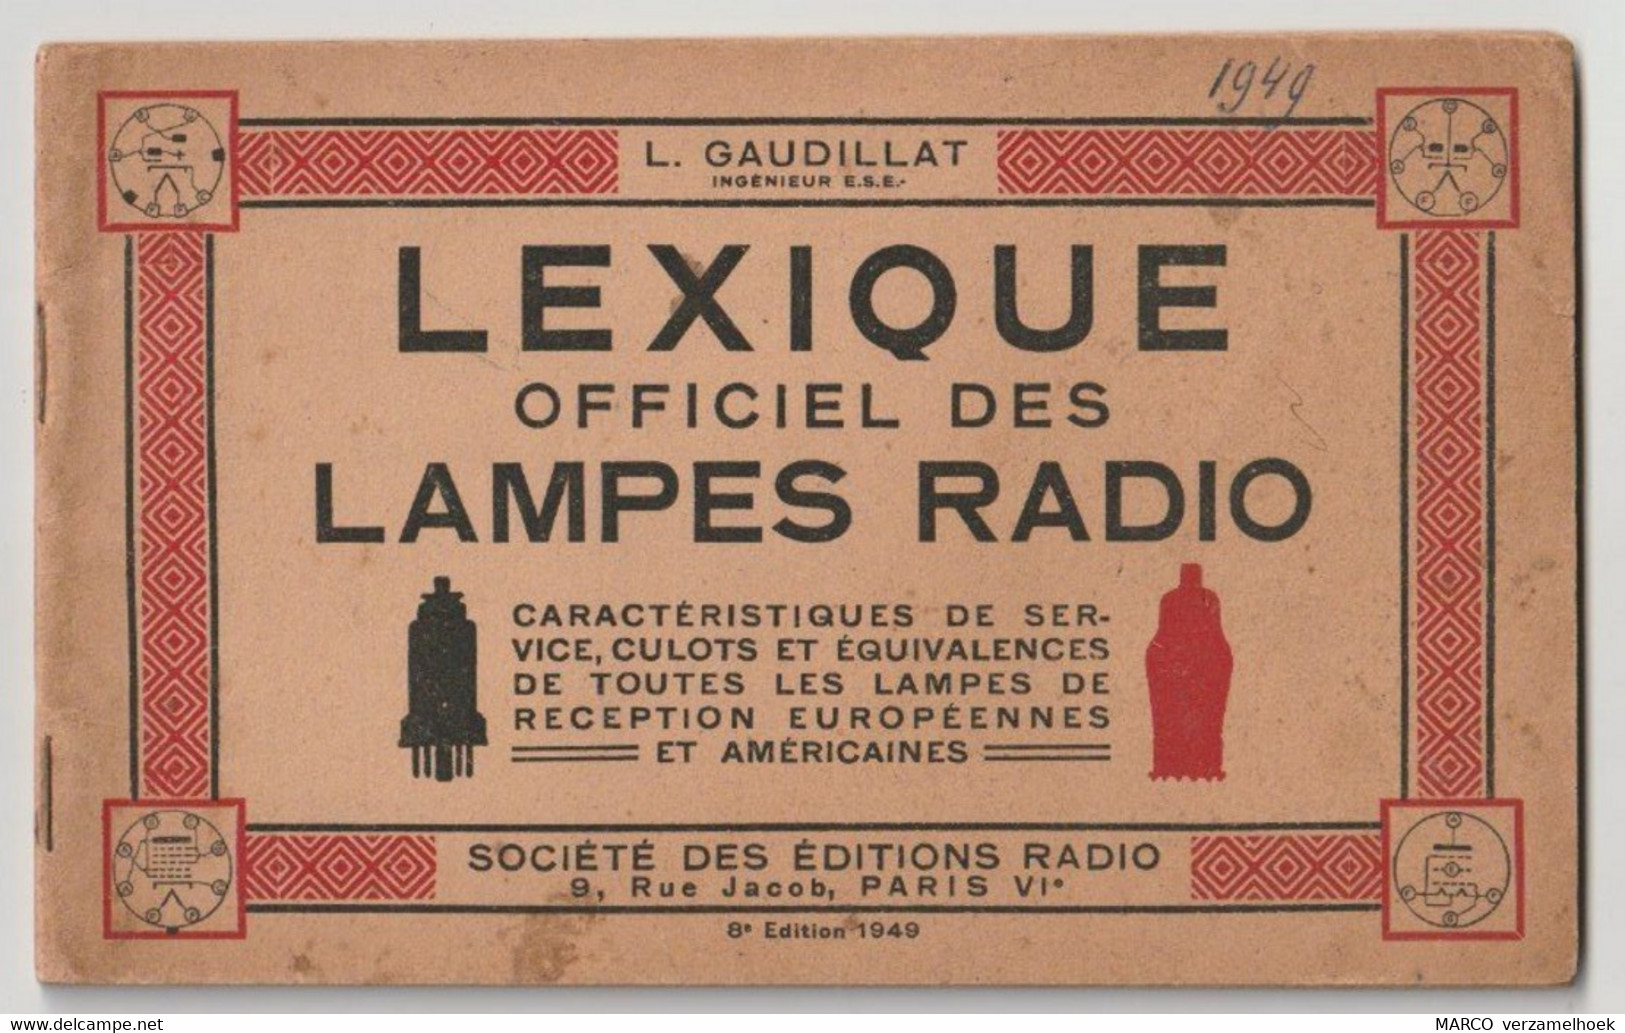 Brochure-leaflet L. Gaudillat LEXIQUE Officiel Des Lampes Radio Paris (F) 1949 Philips Miniwatt - Literatur & Schaltpläne